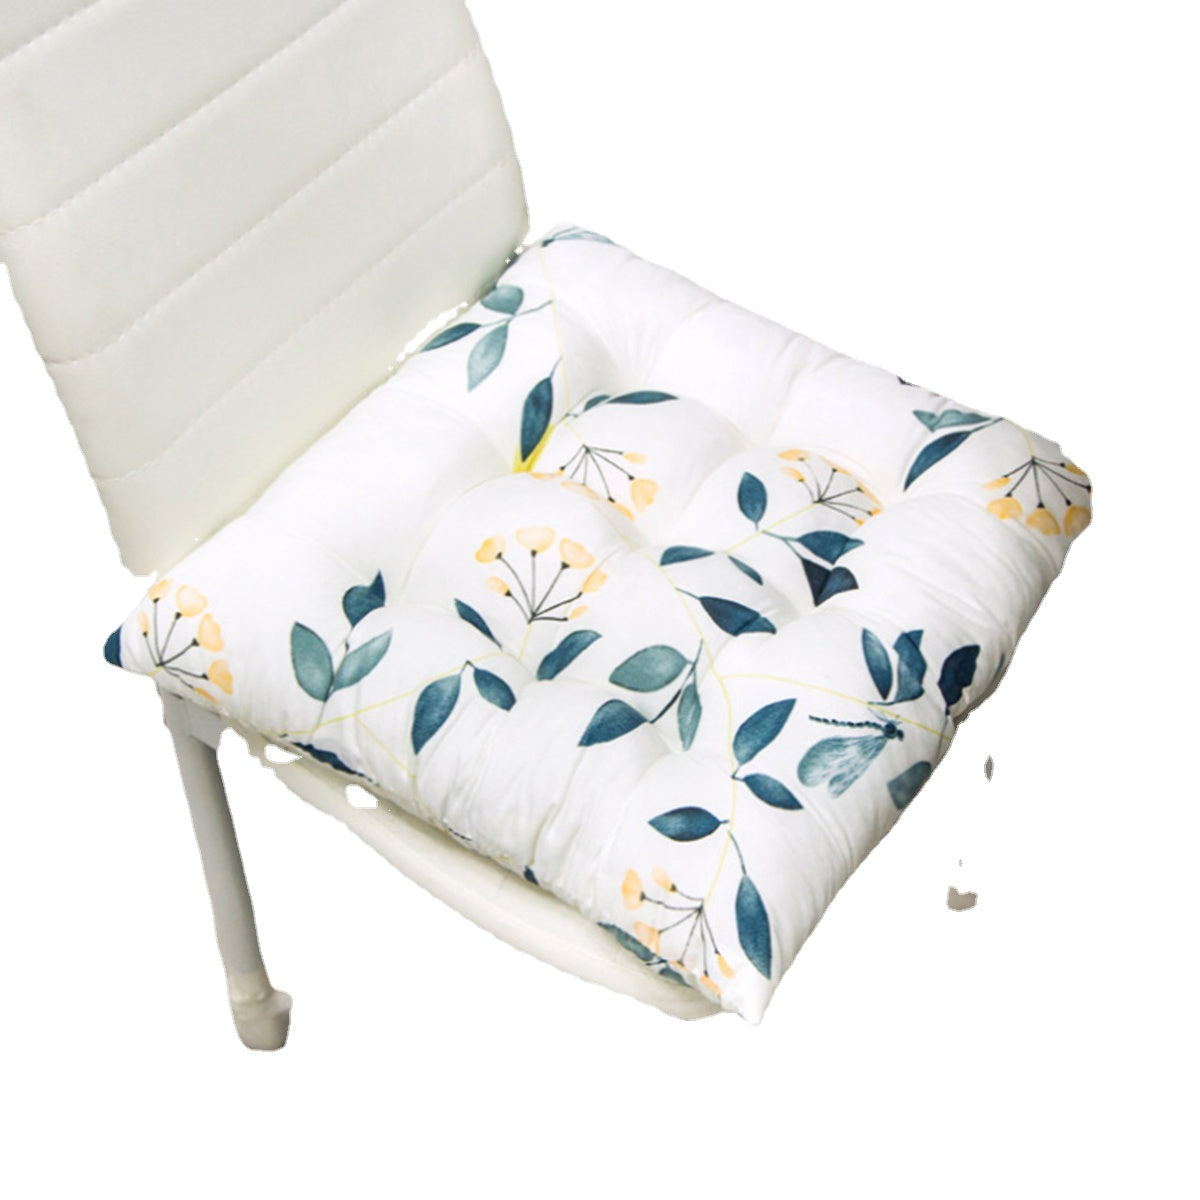 Cotton Chair Pad Thicker Cushion Office Seat Sofa Floor Mat Cover Warm